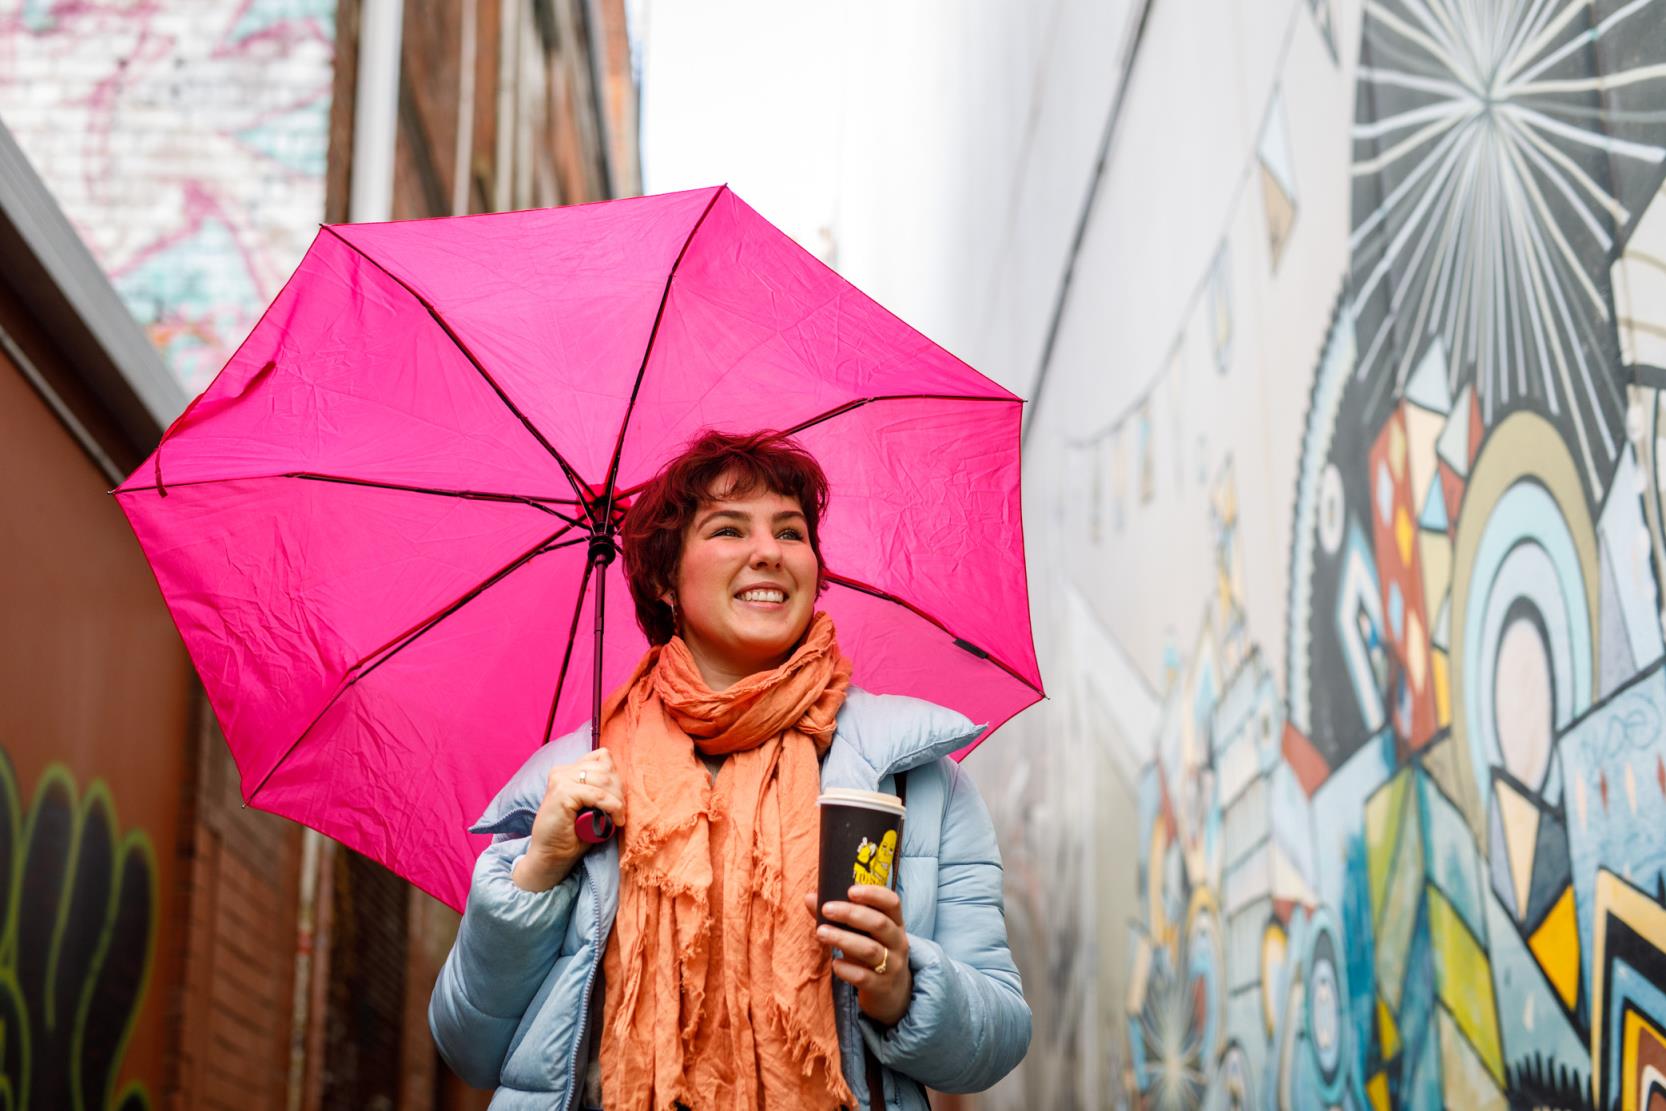 Girl holds umbrella in art filled laneway